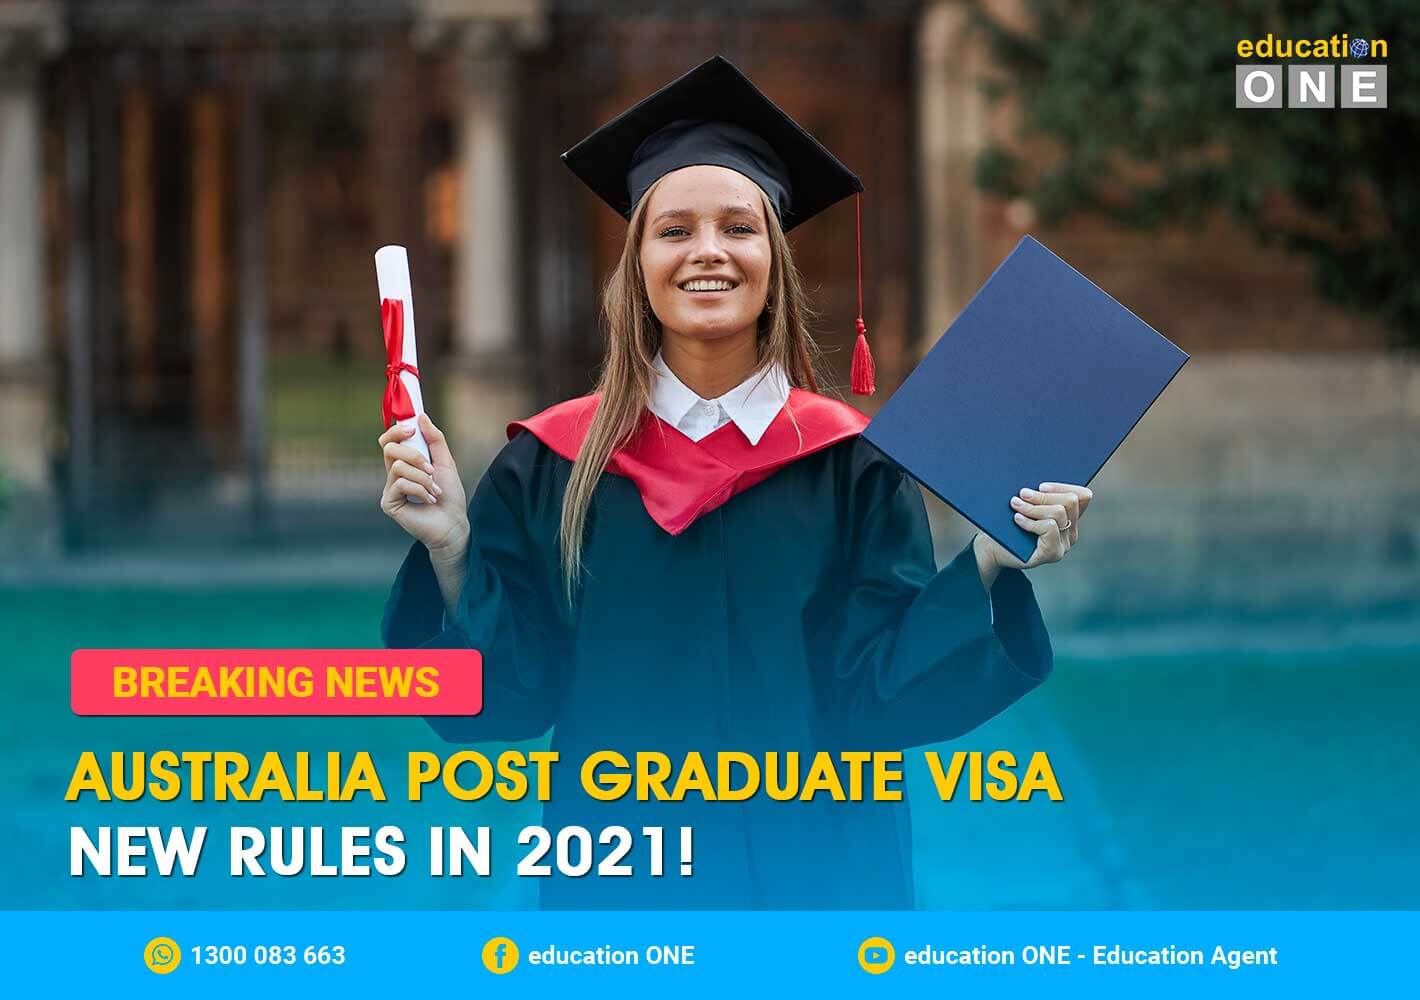 Australia Post Graduate Visa New Rules in 2021